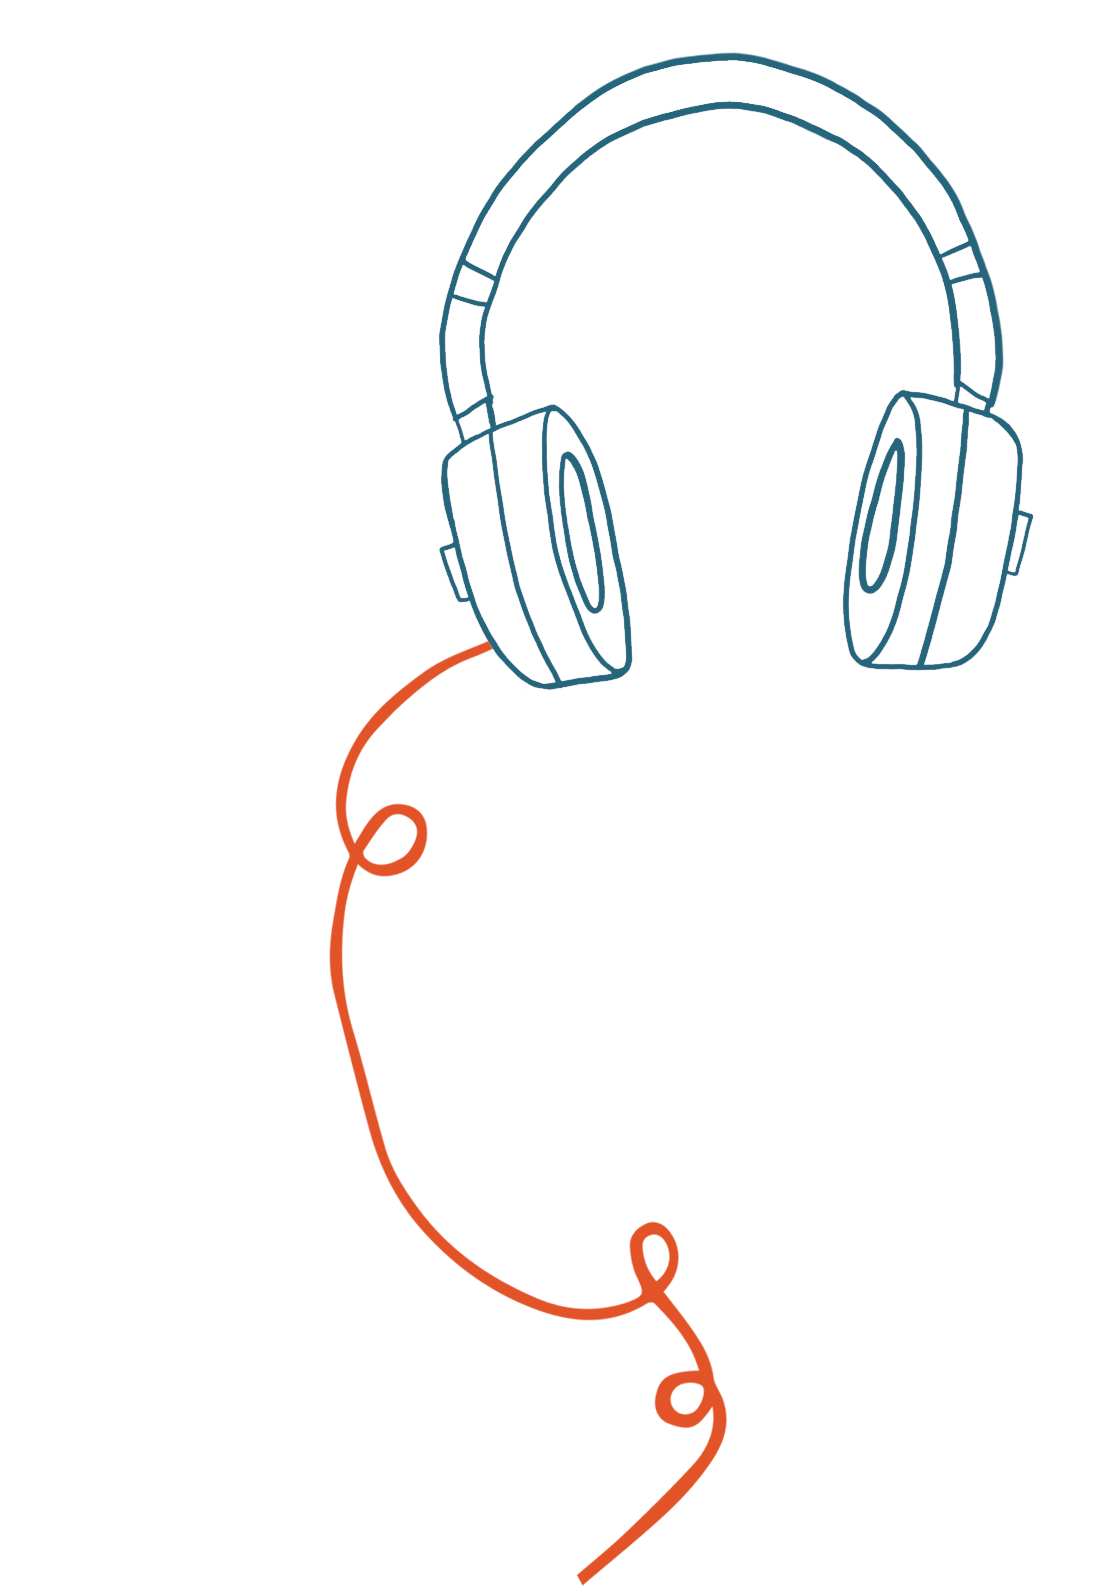 Headphones and cord